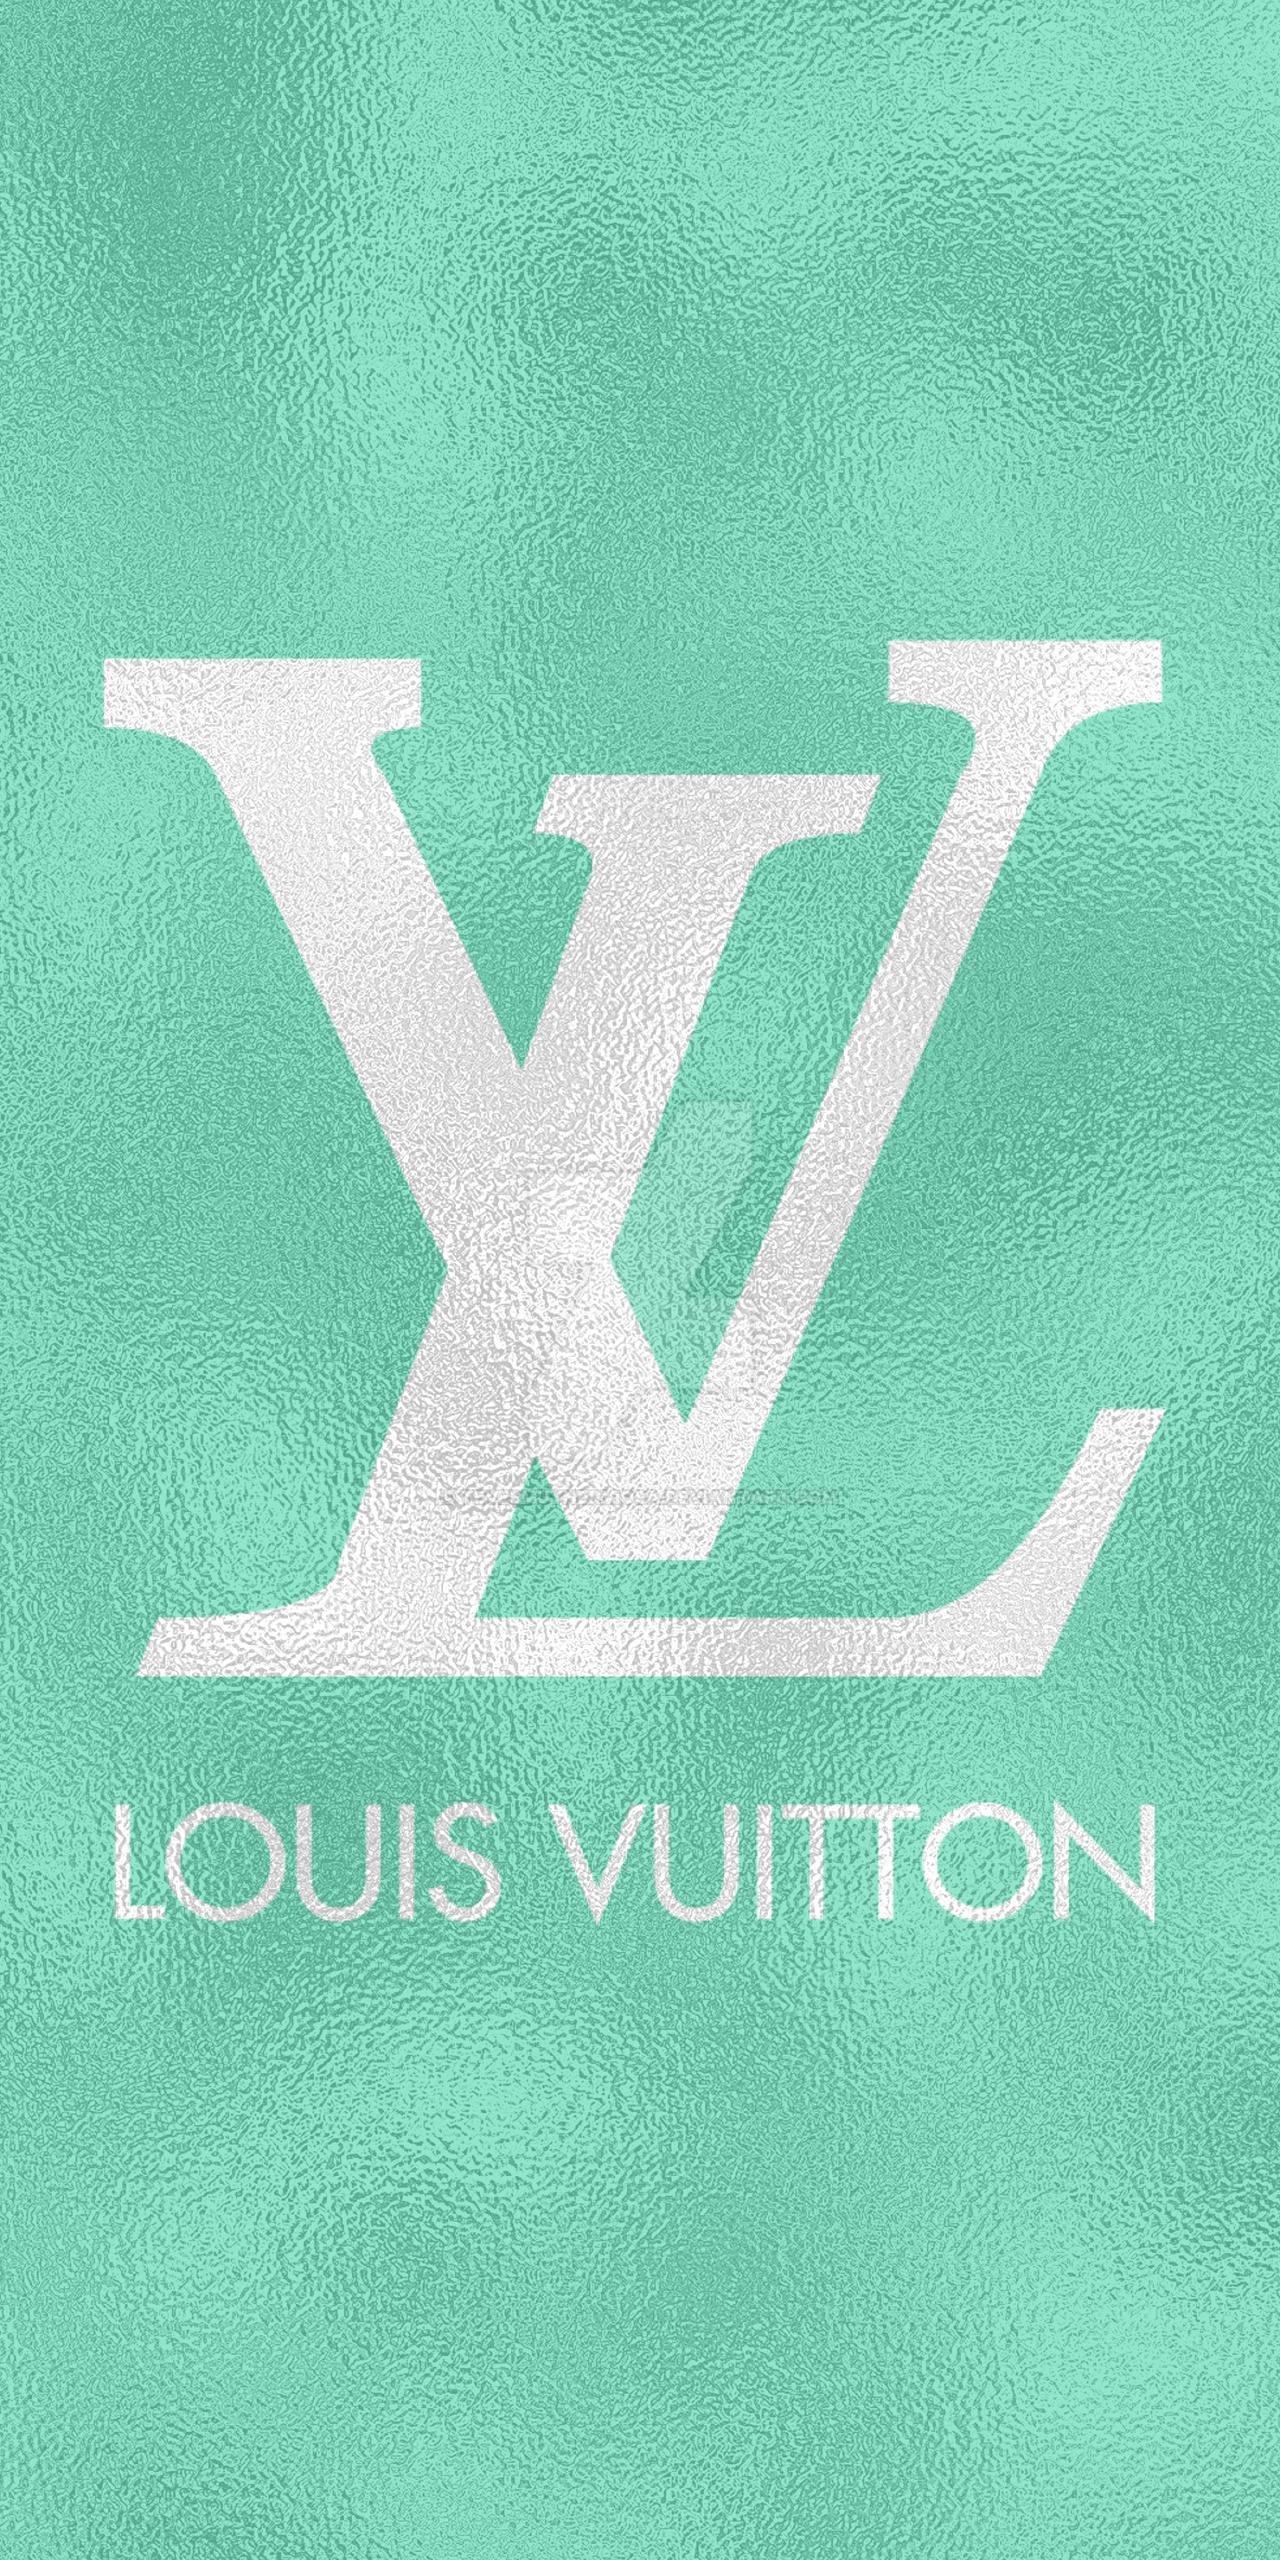 Louis Vuitton Logo Transparent Background by TeVesMuyNerviosa on DeviantArt